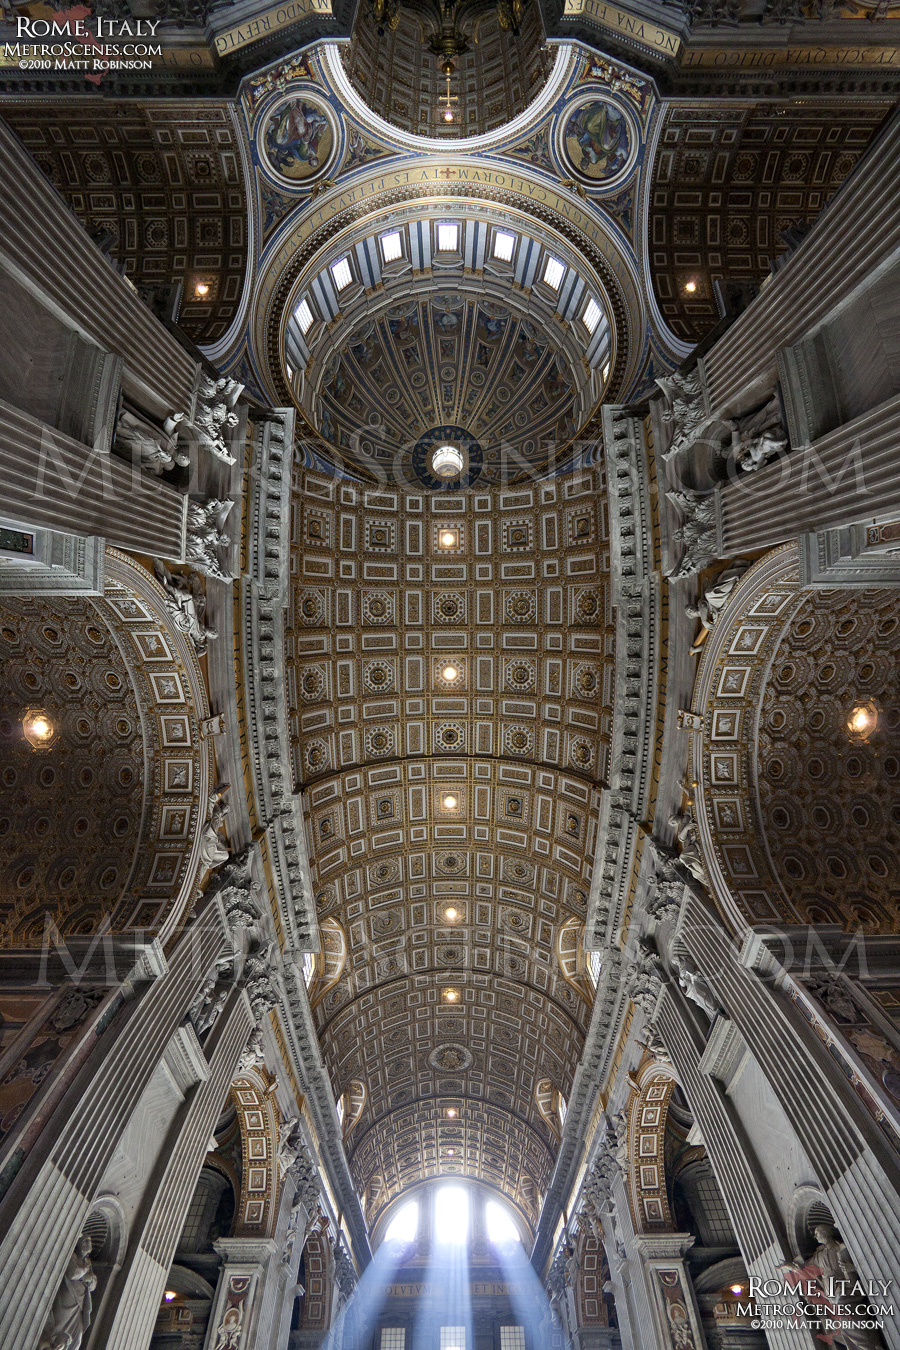 Ceiling of Saint Peter's Basilica